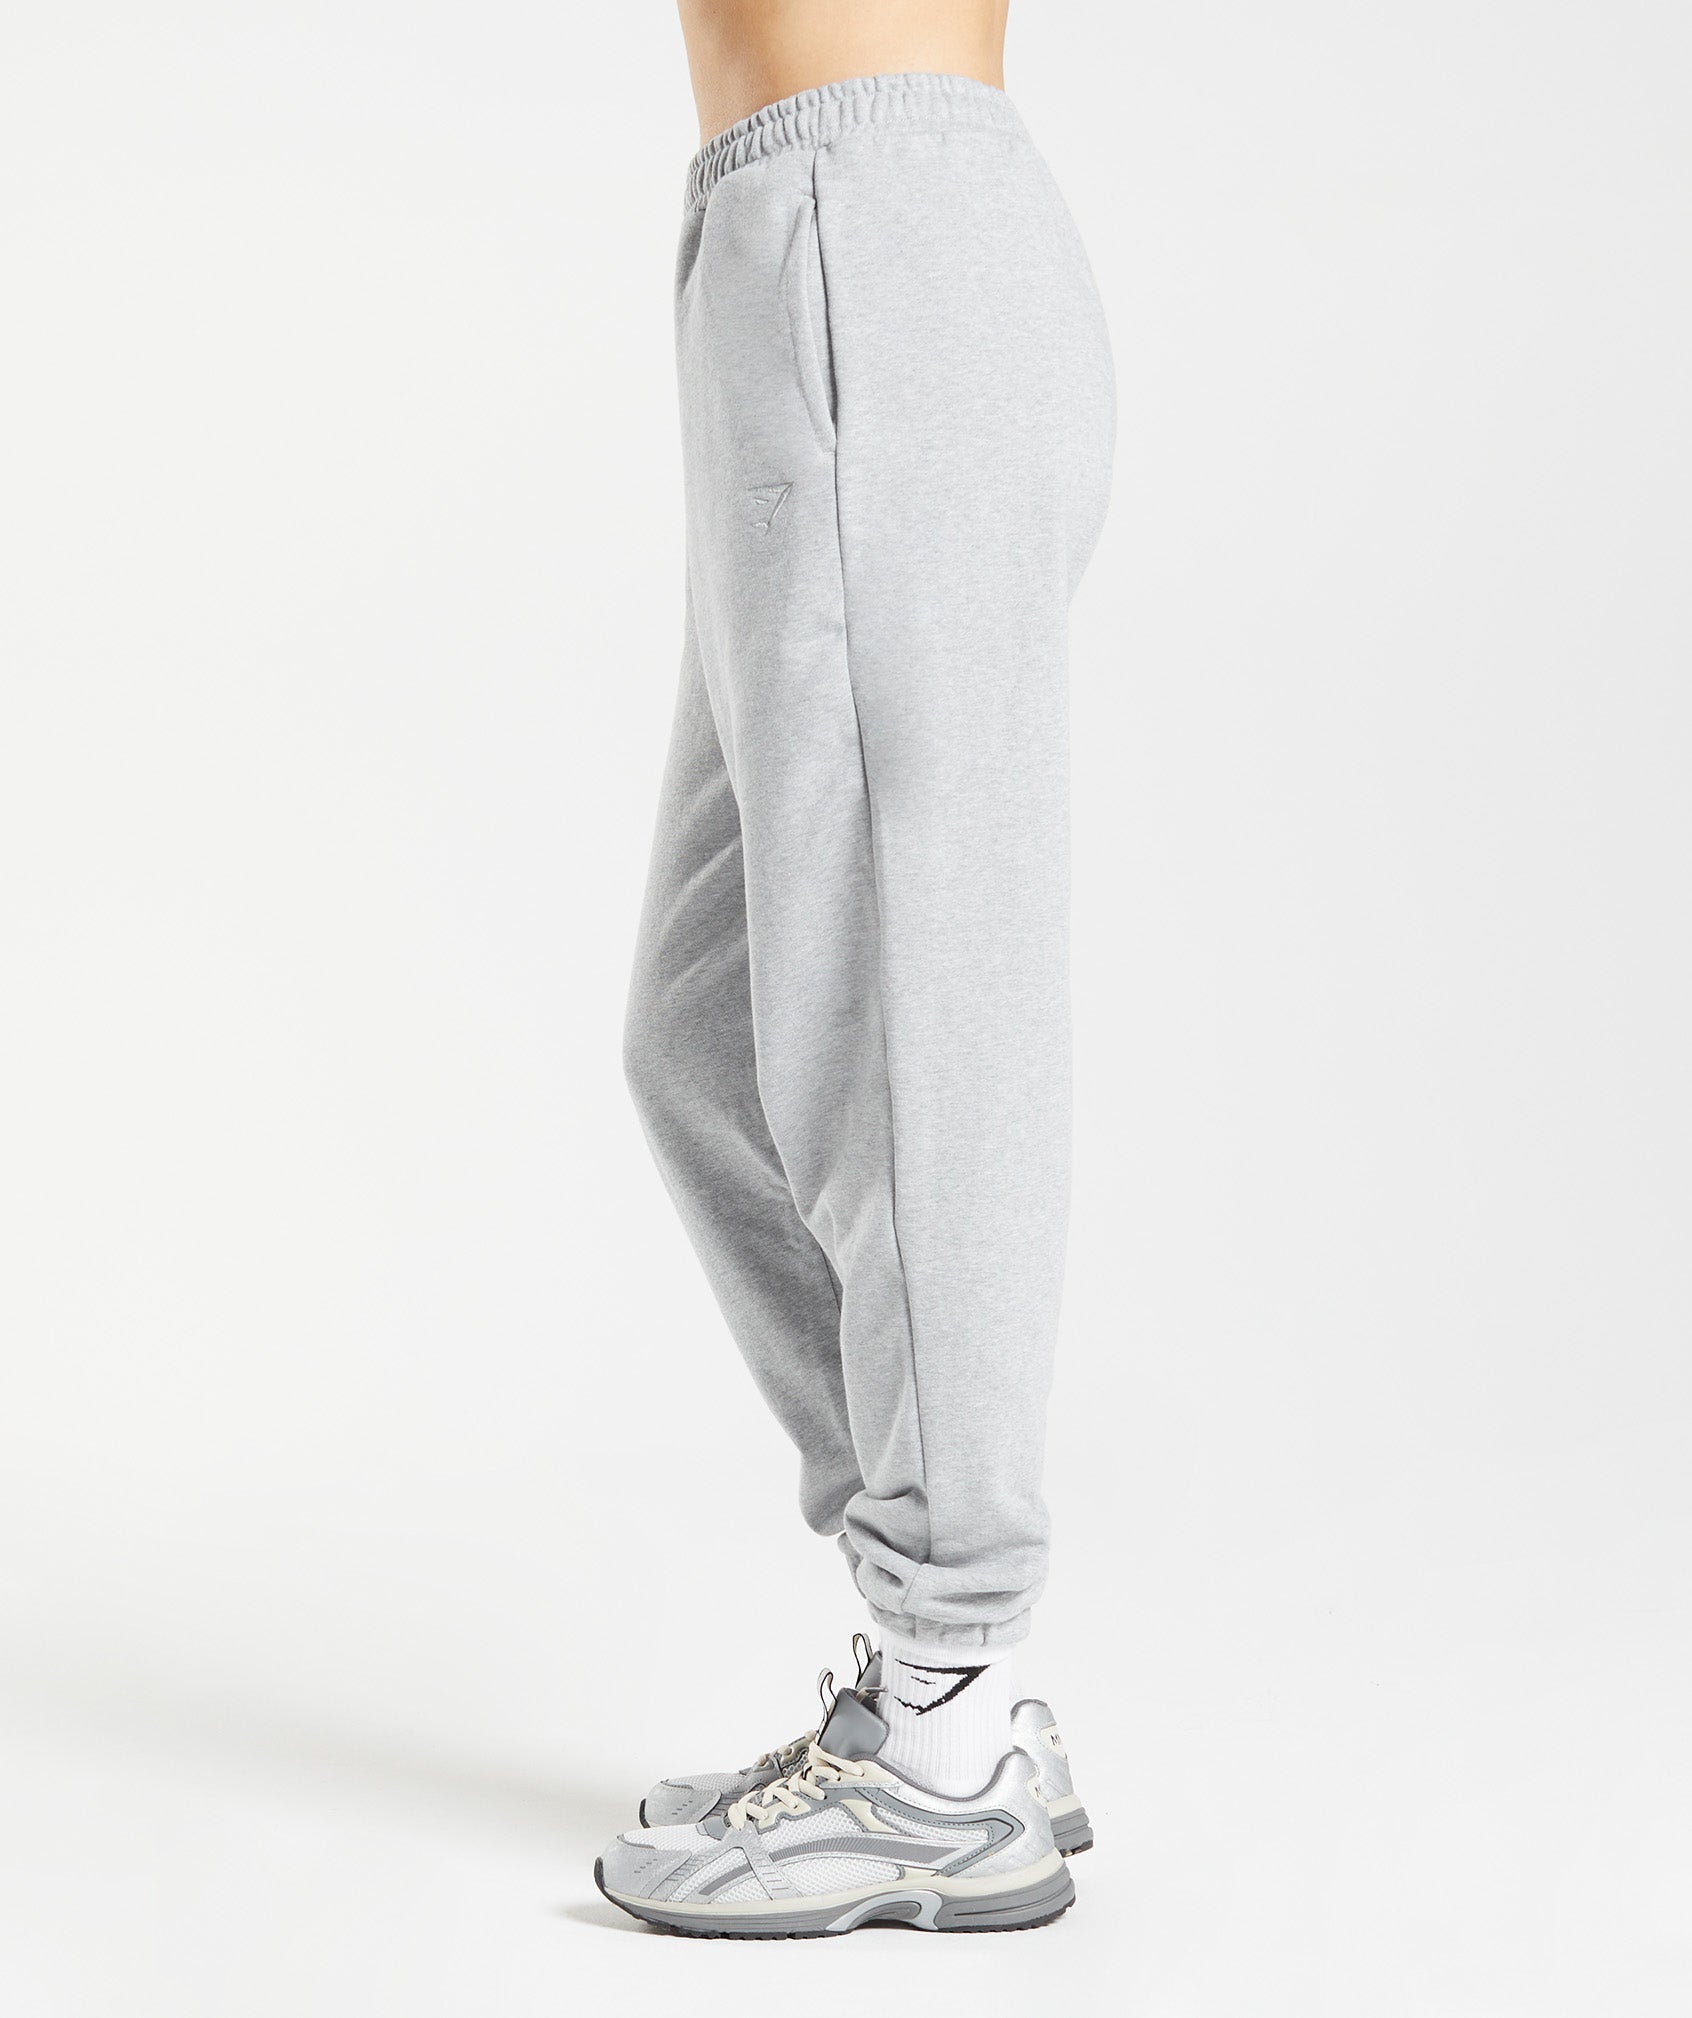 Gymshark, Pants, Gymshark Adult Men Women Gray Sweatpants Joggers Size  Medium Athletic Pants